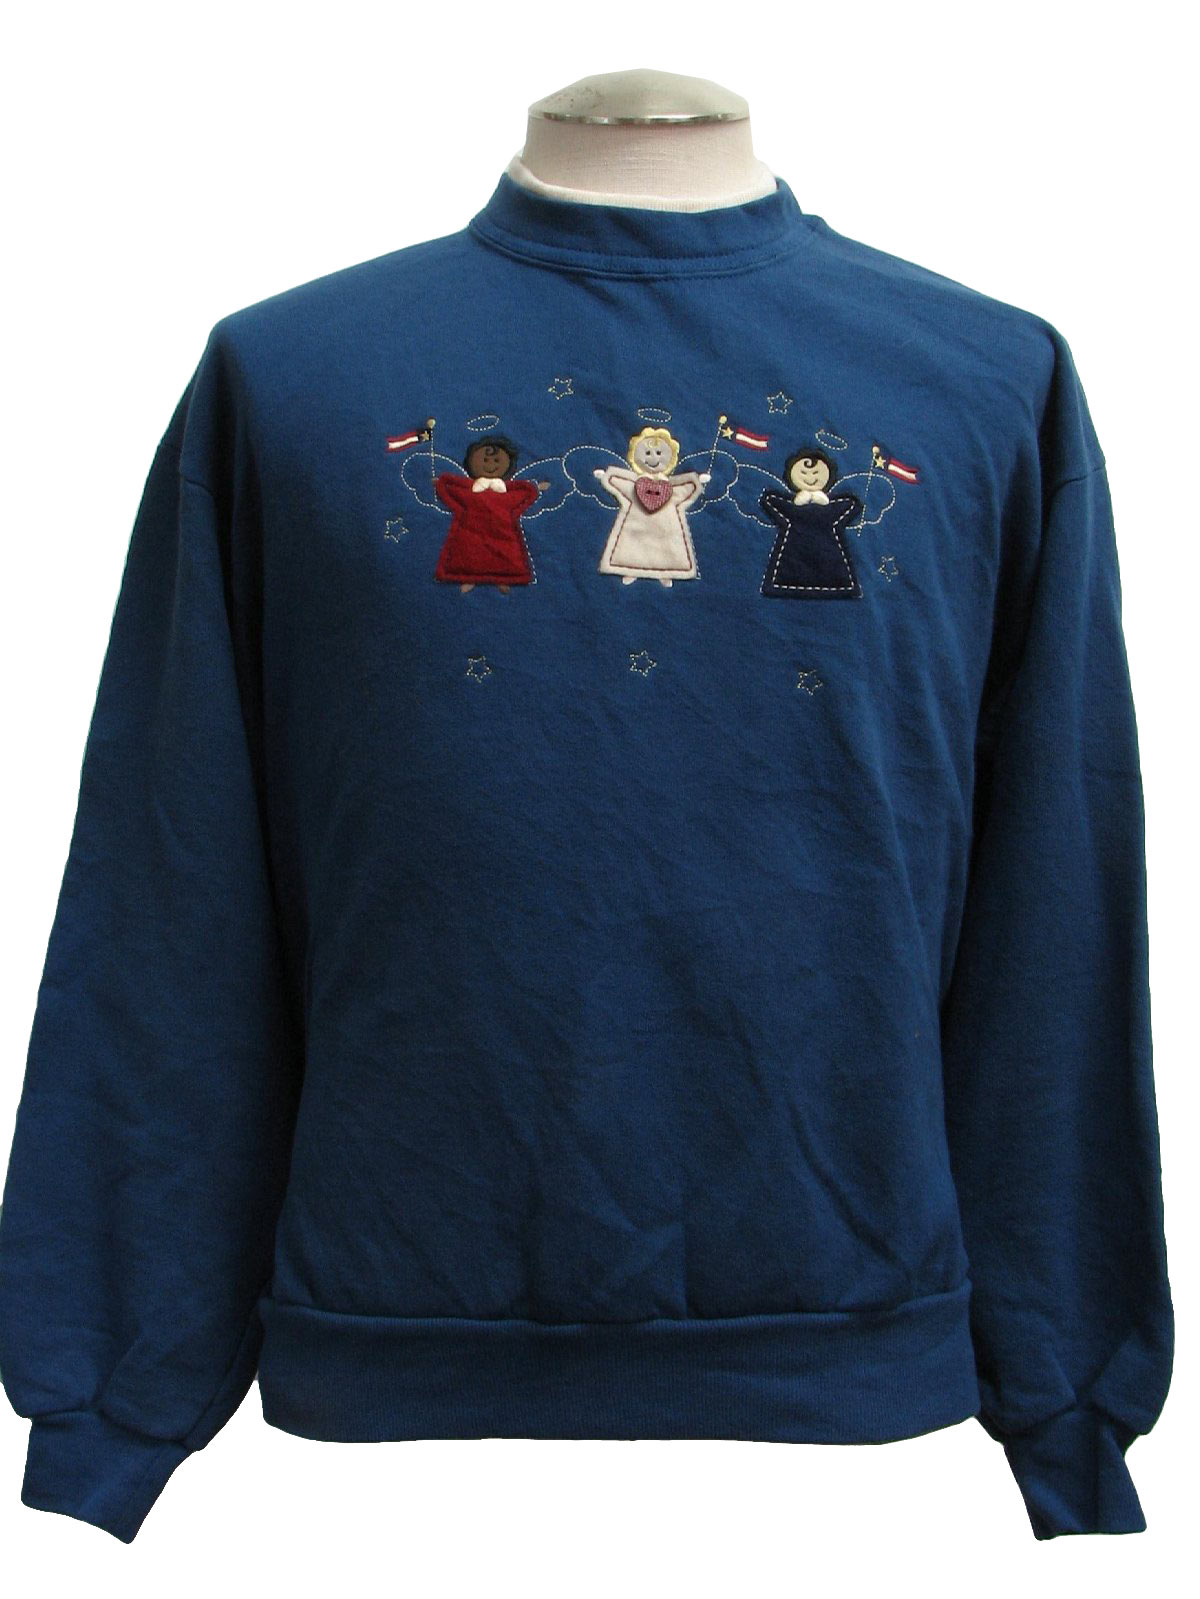 Ugly Christmas Sweatshirt: -Top Stitch- Unisex blue background cotton ...